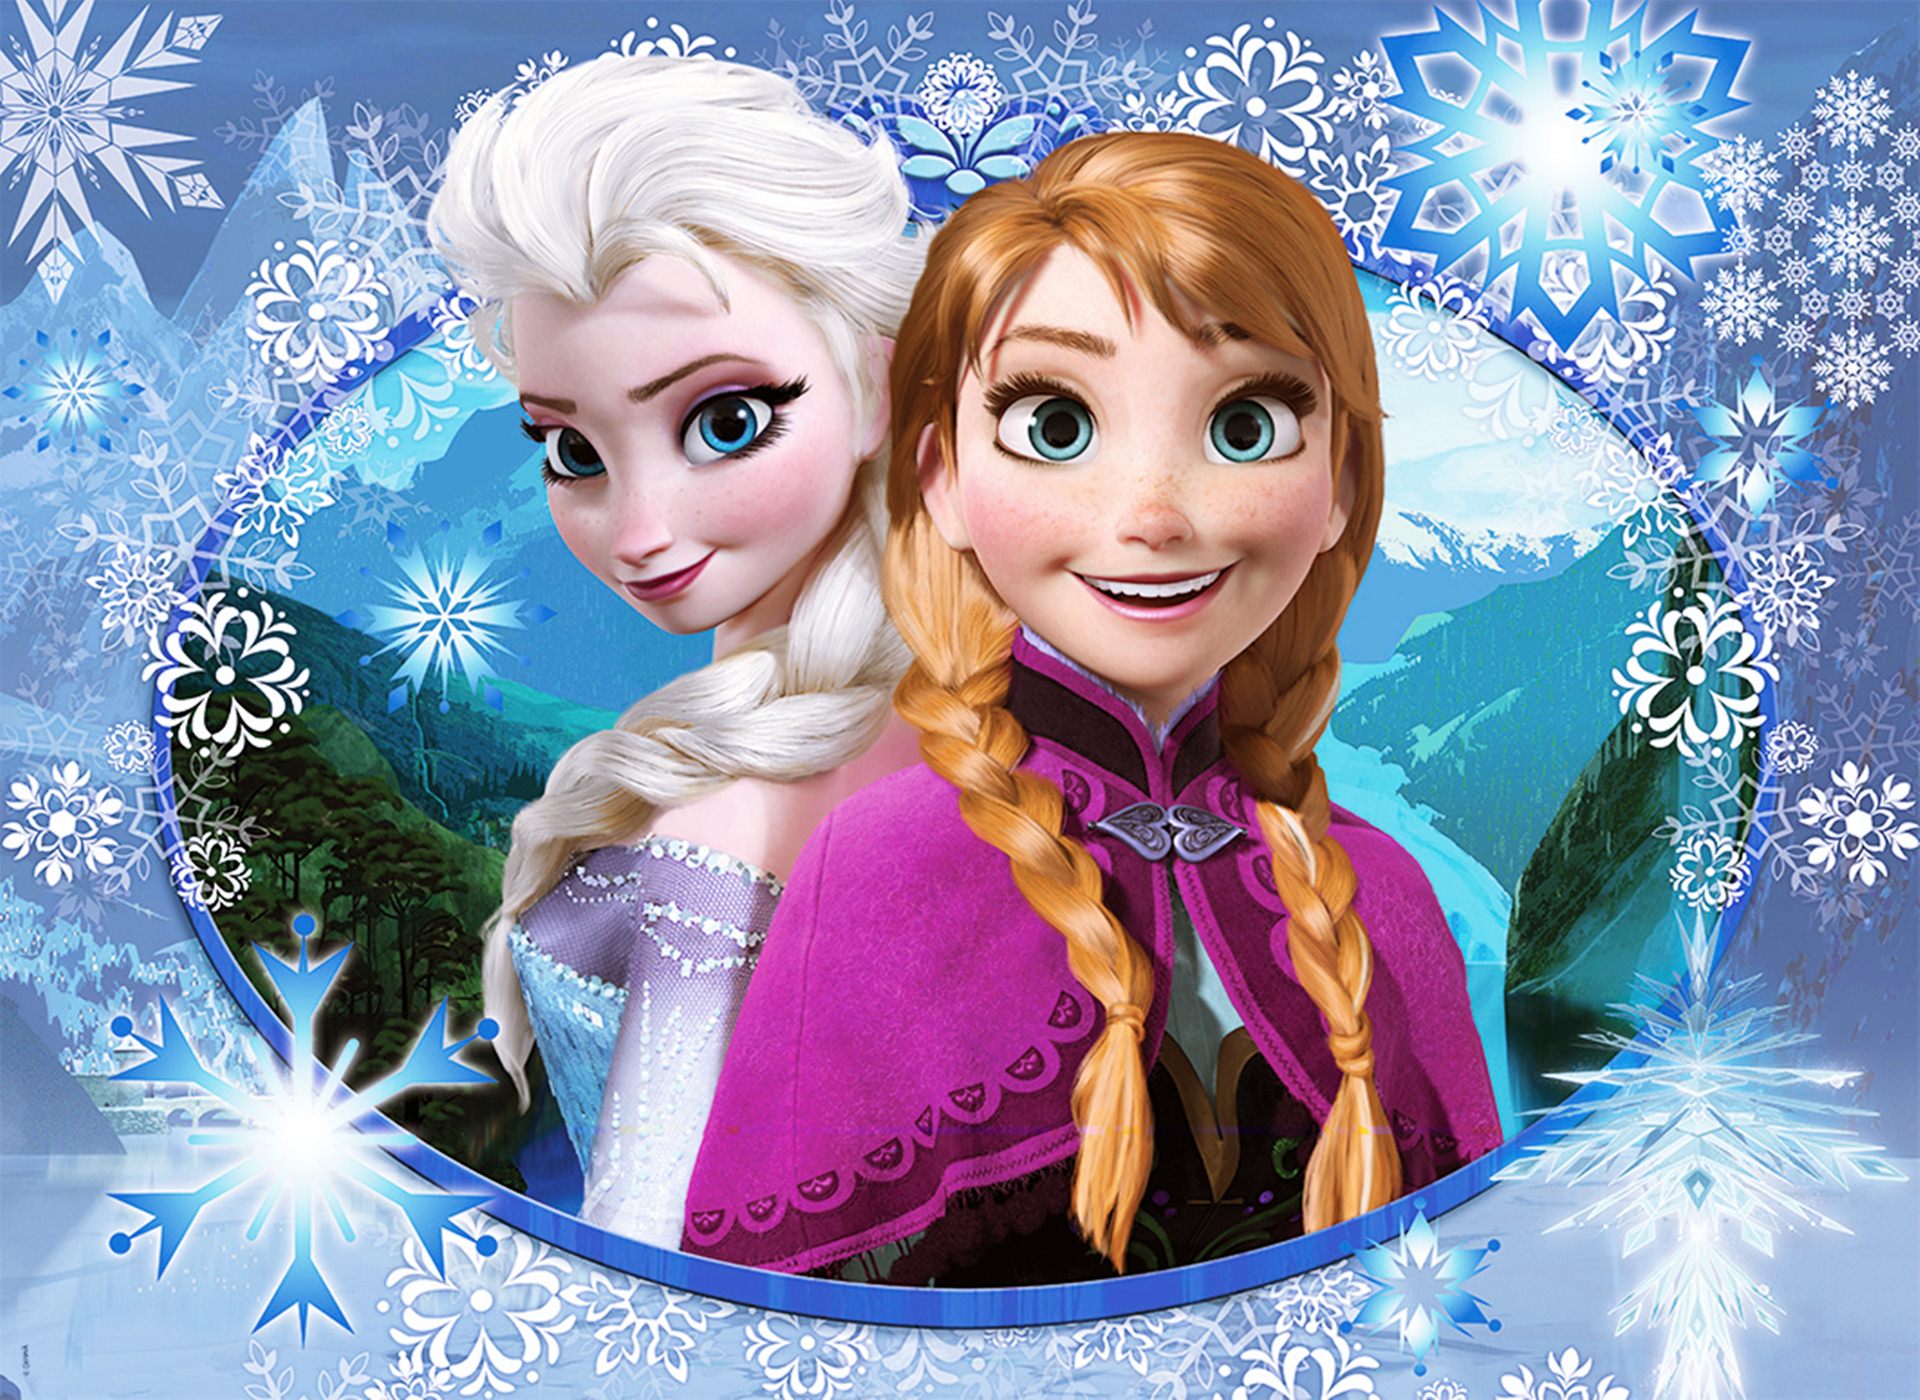 47+] Anna and Elsa Frozen Wallpaper - WallpaperSafari